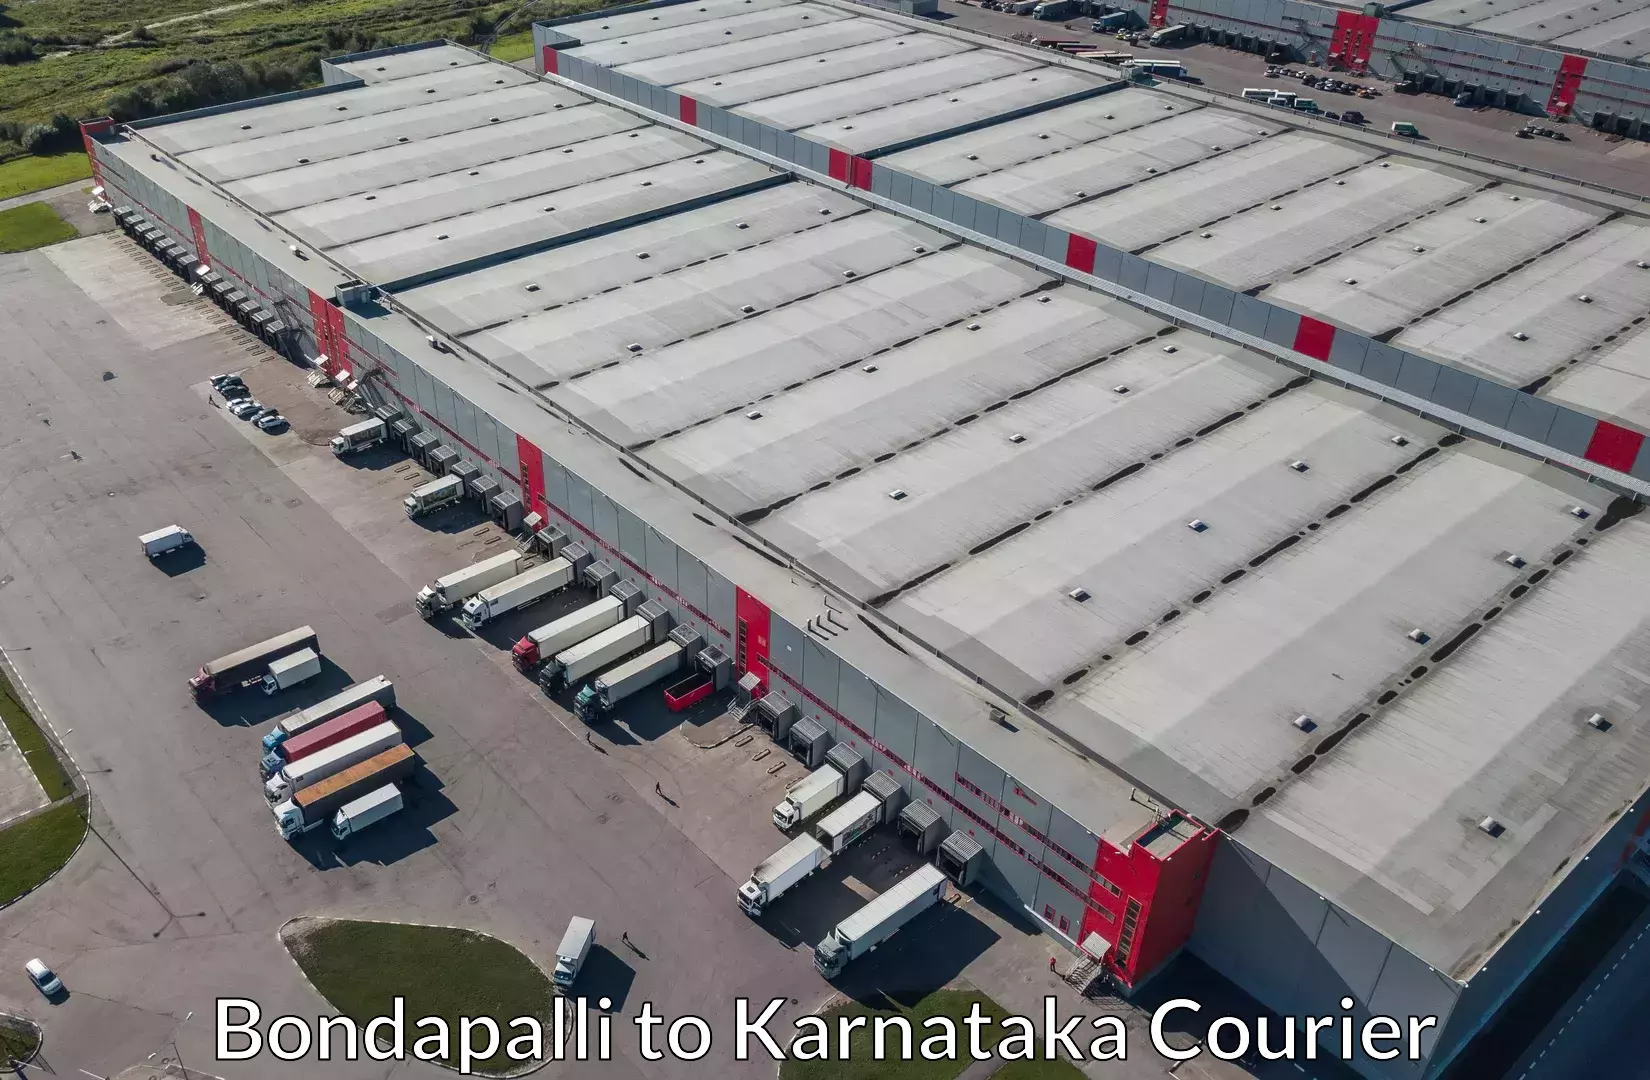 Moving and packing experts Bondapalli to Karnataka